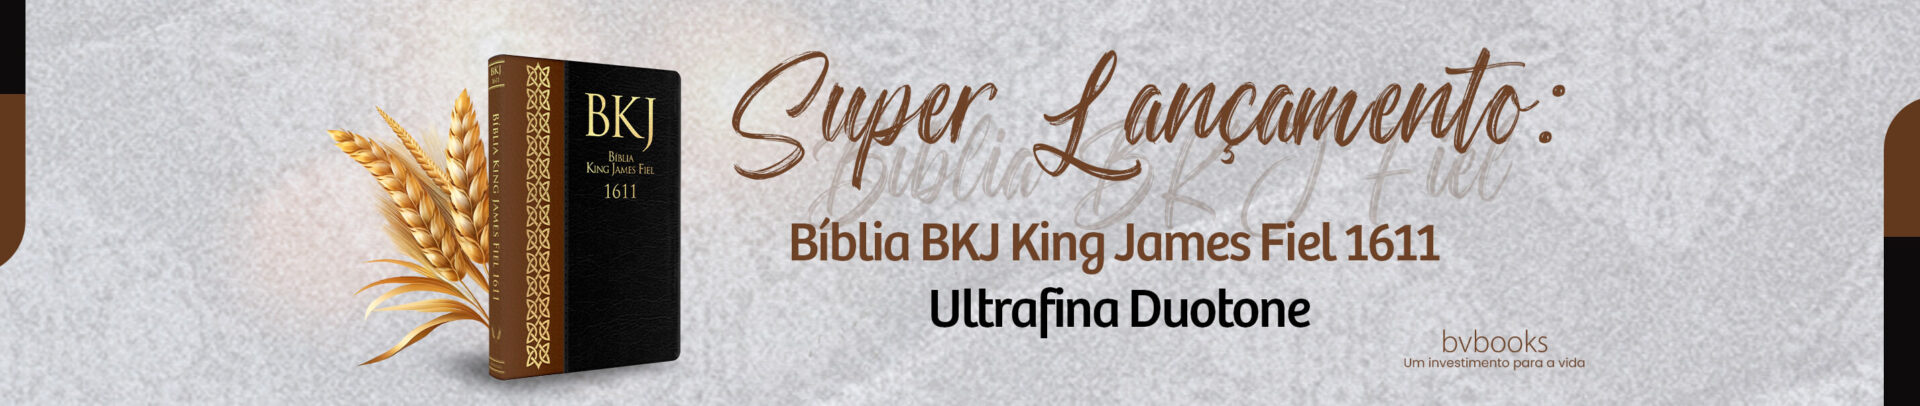 Super Lançamento Bíblia BKJ King James Fiel 1611 Ultrafina Duotone